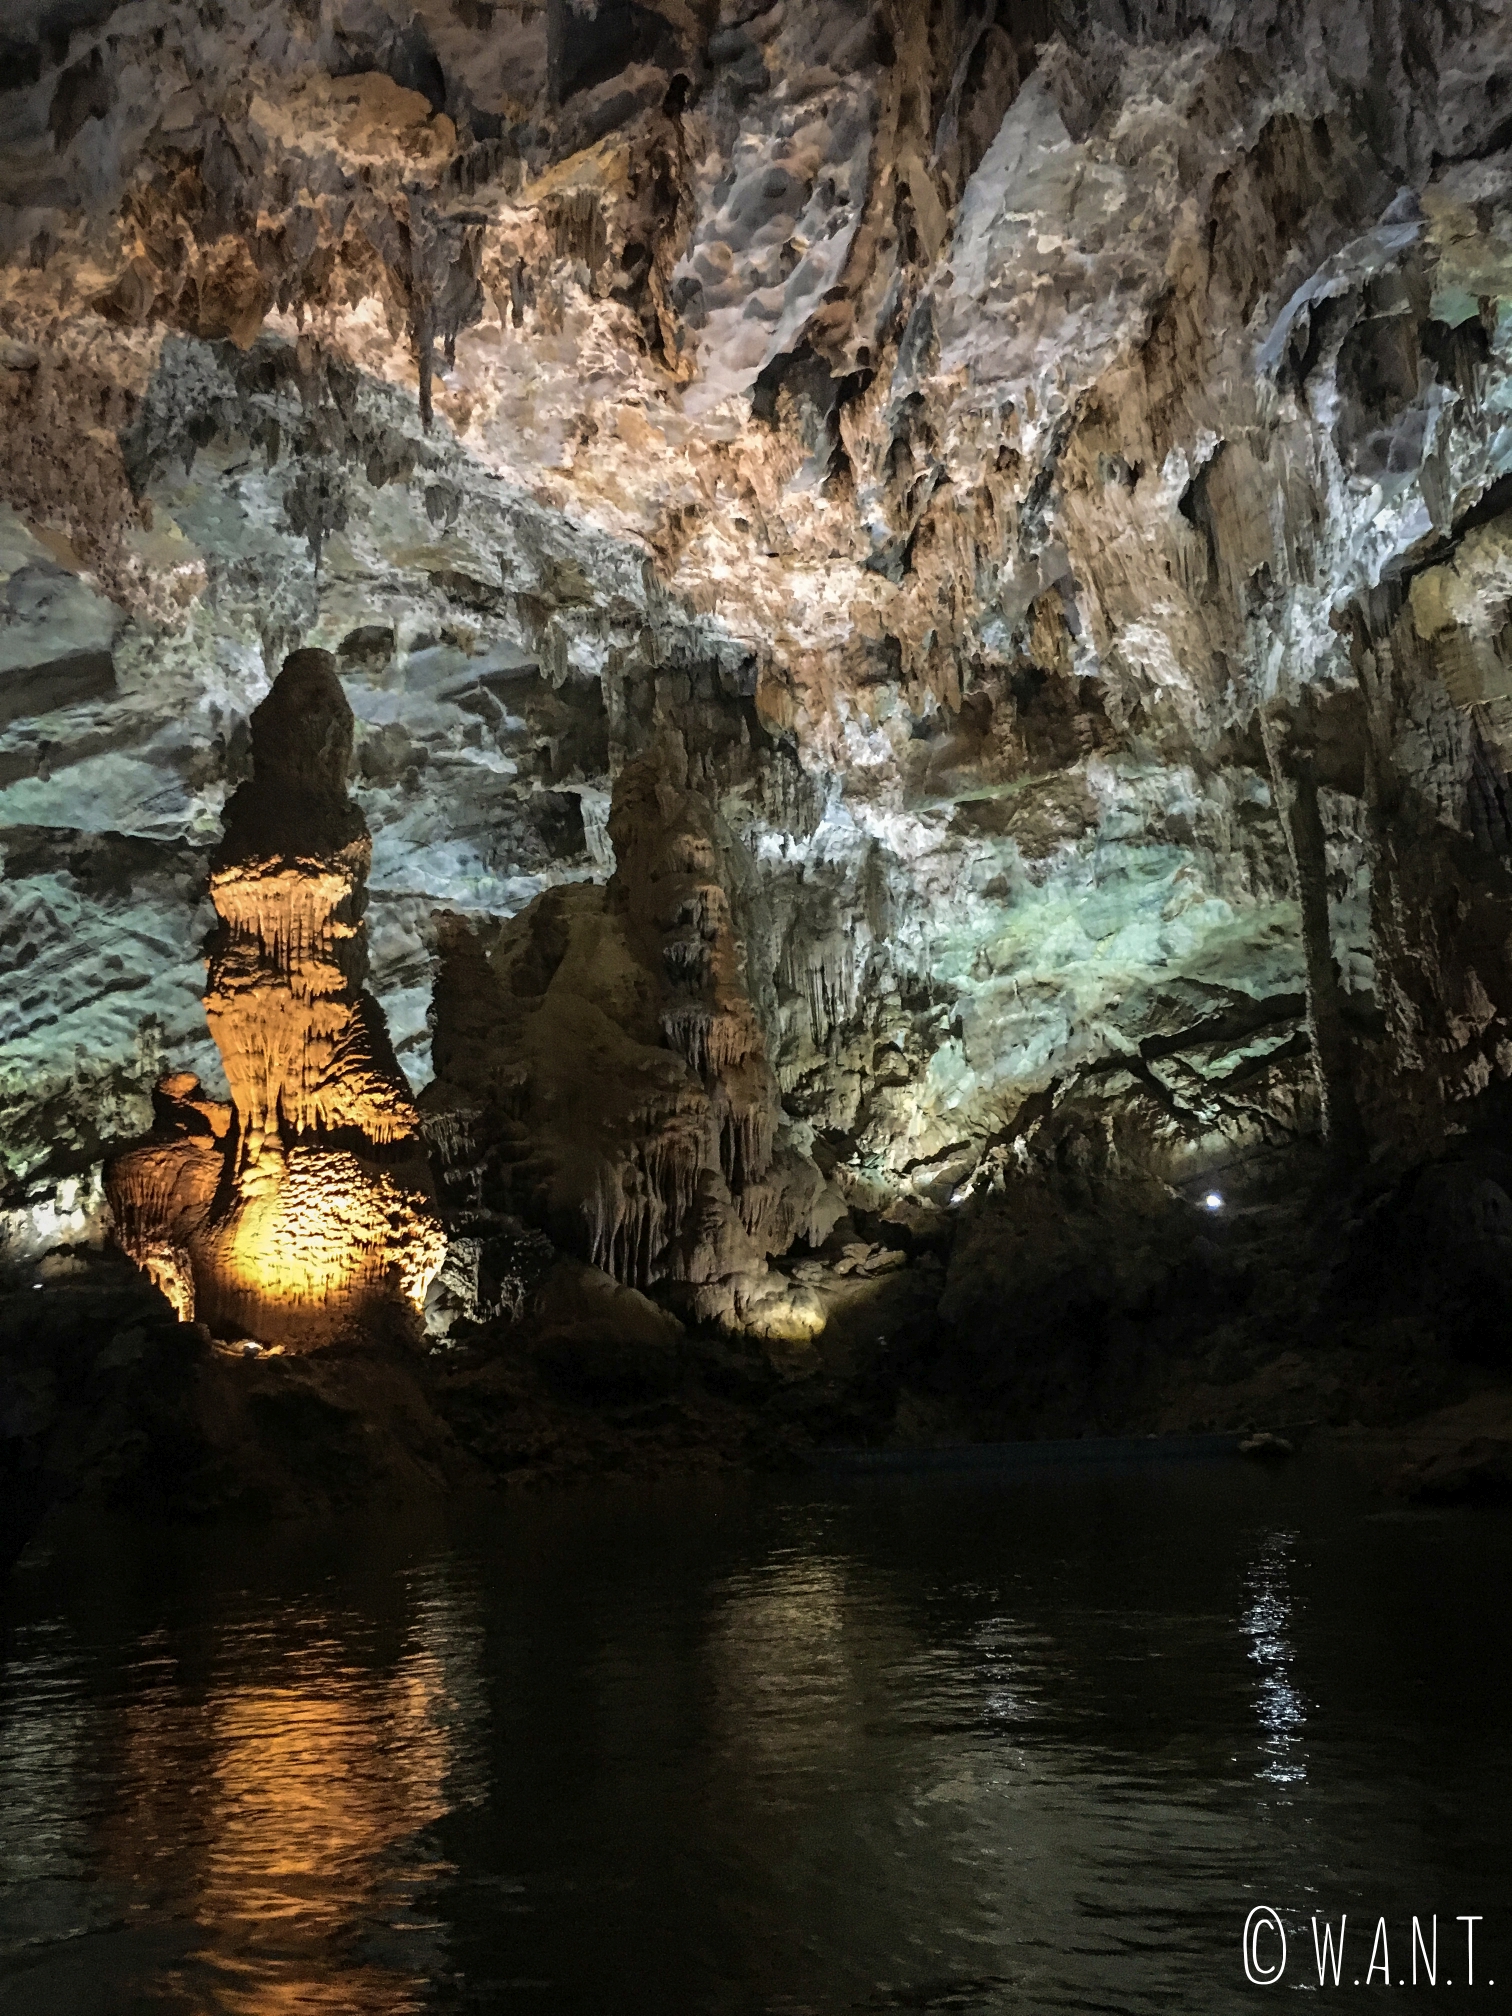 La visite de la grotte de Phong Nha n'est possible qu'en bateau